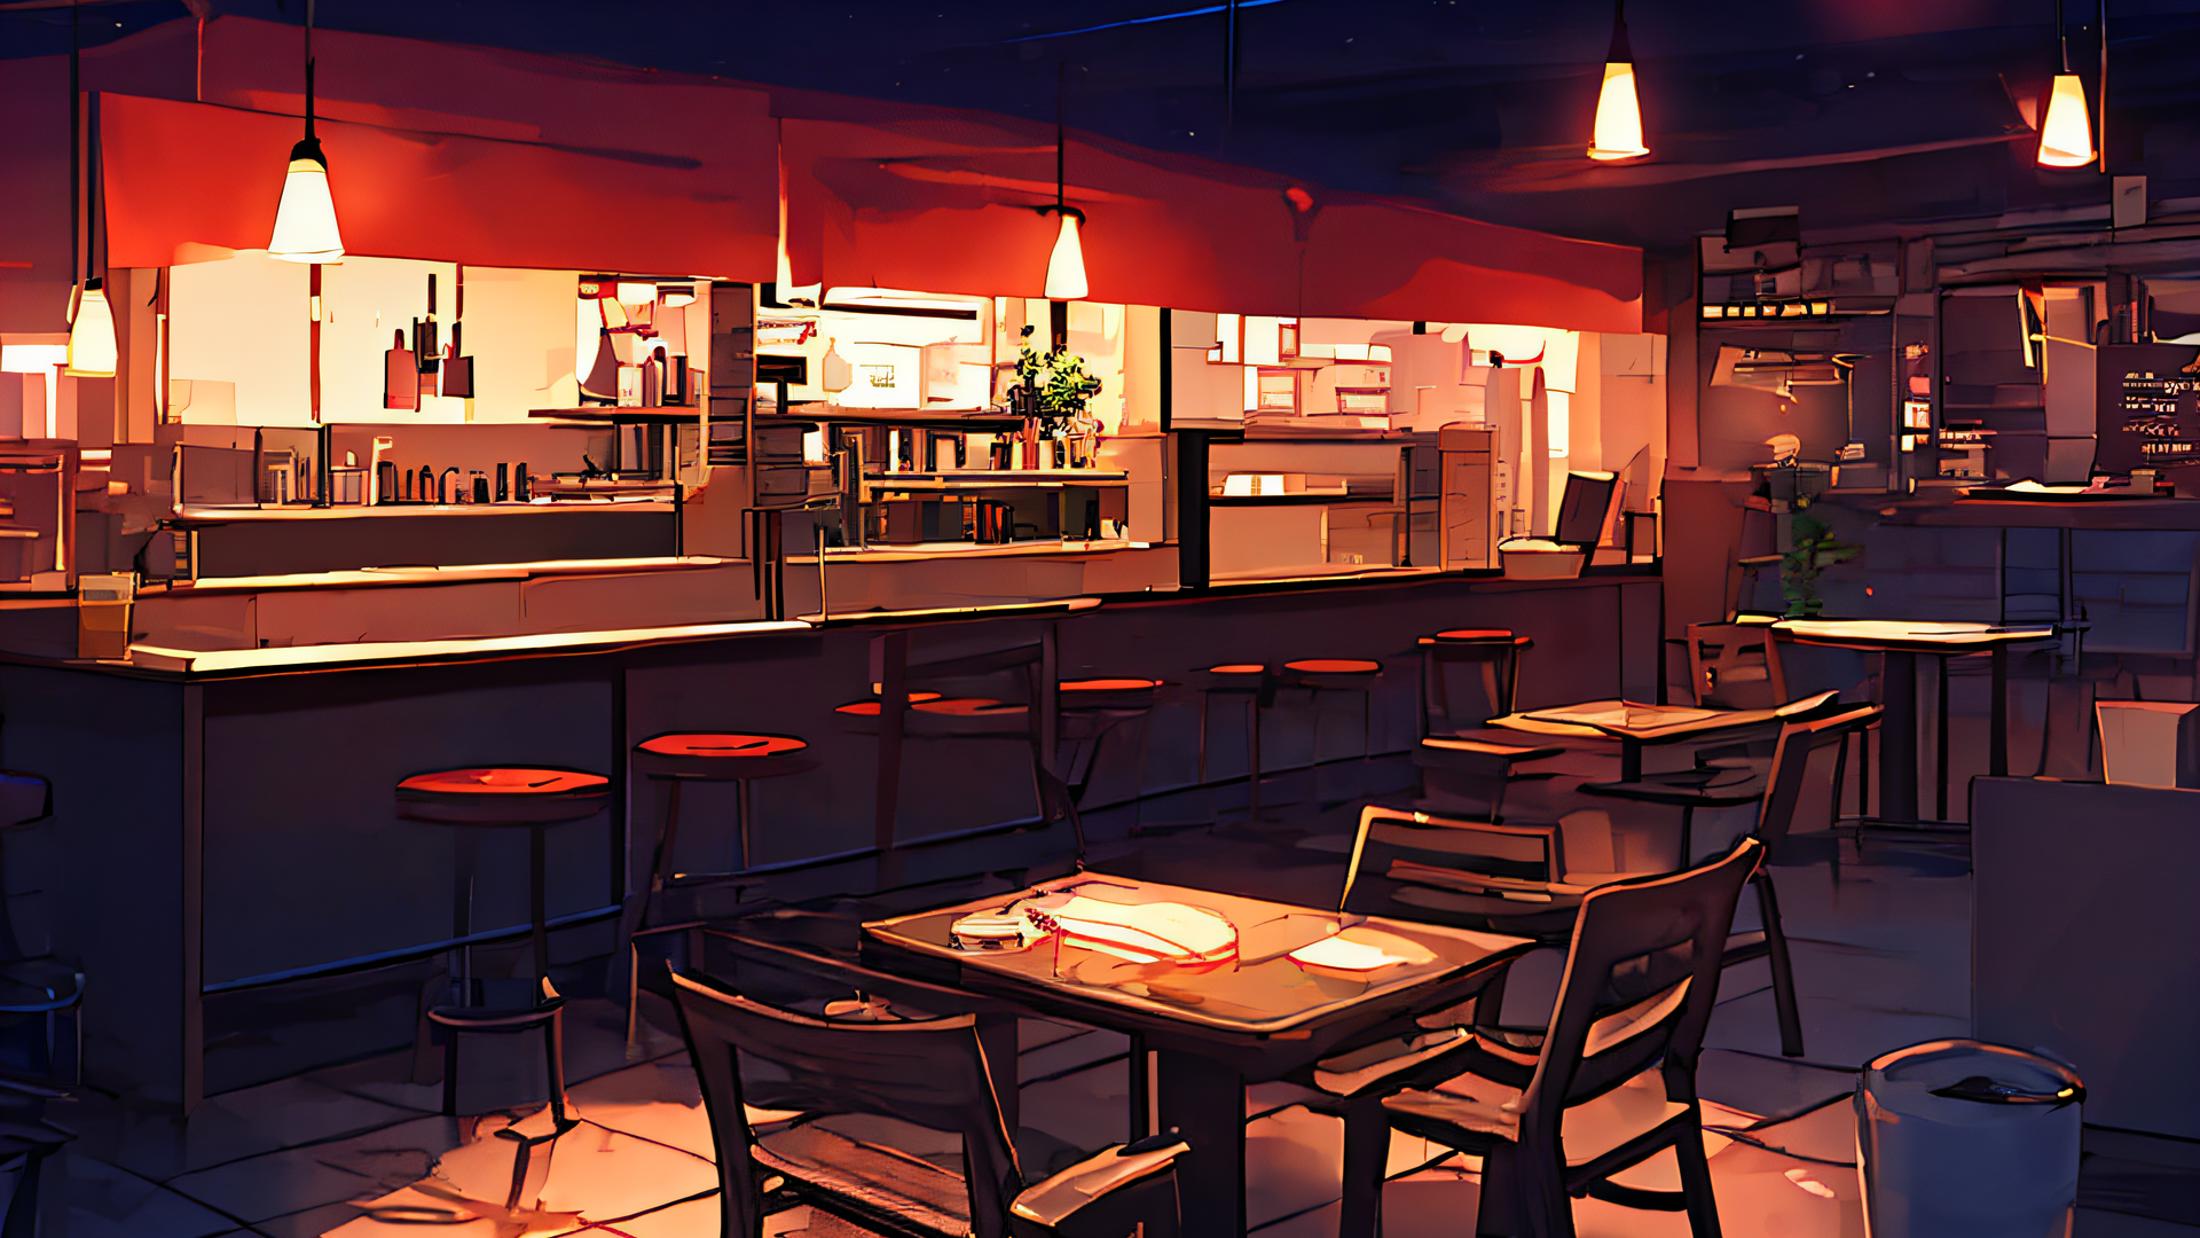 Niji Visual Novel Background image by EcchiAngels